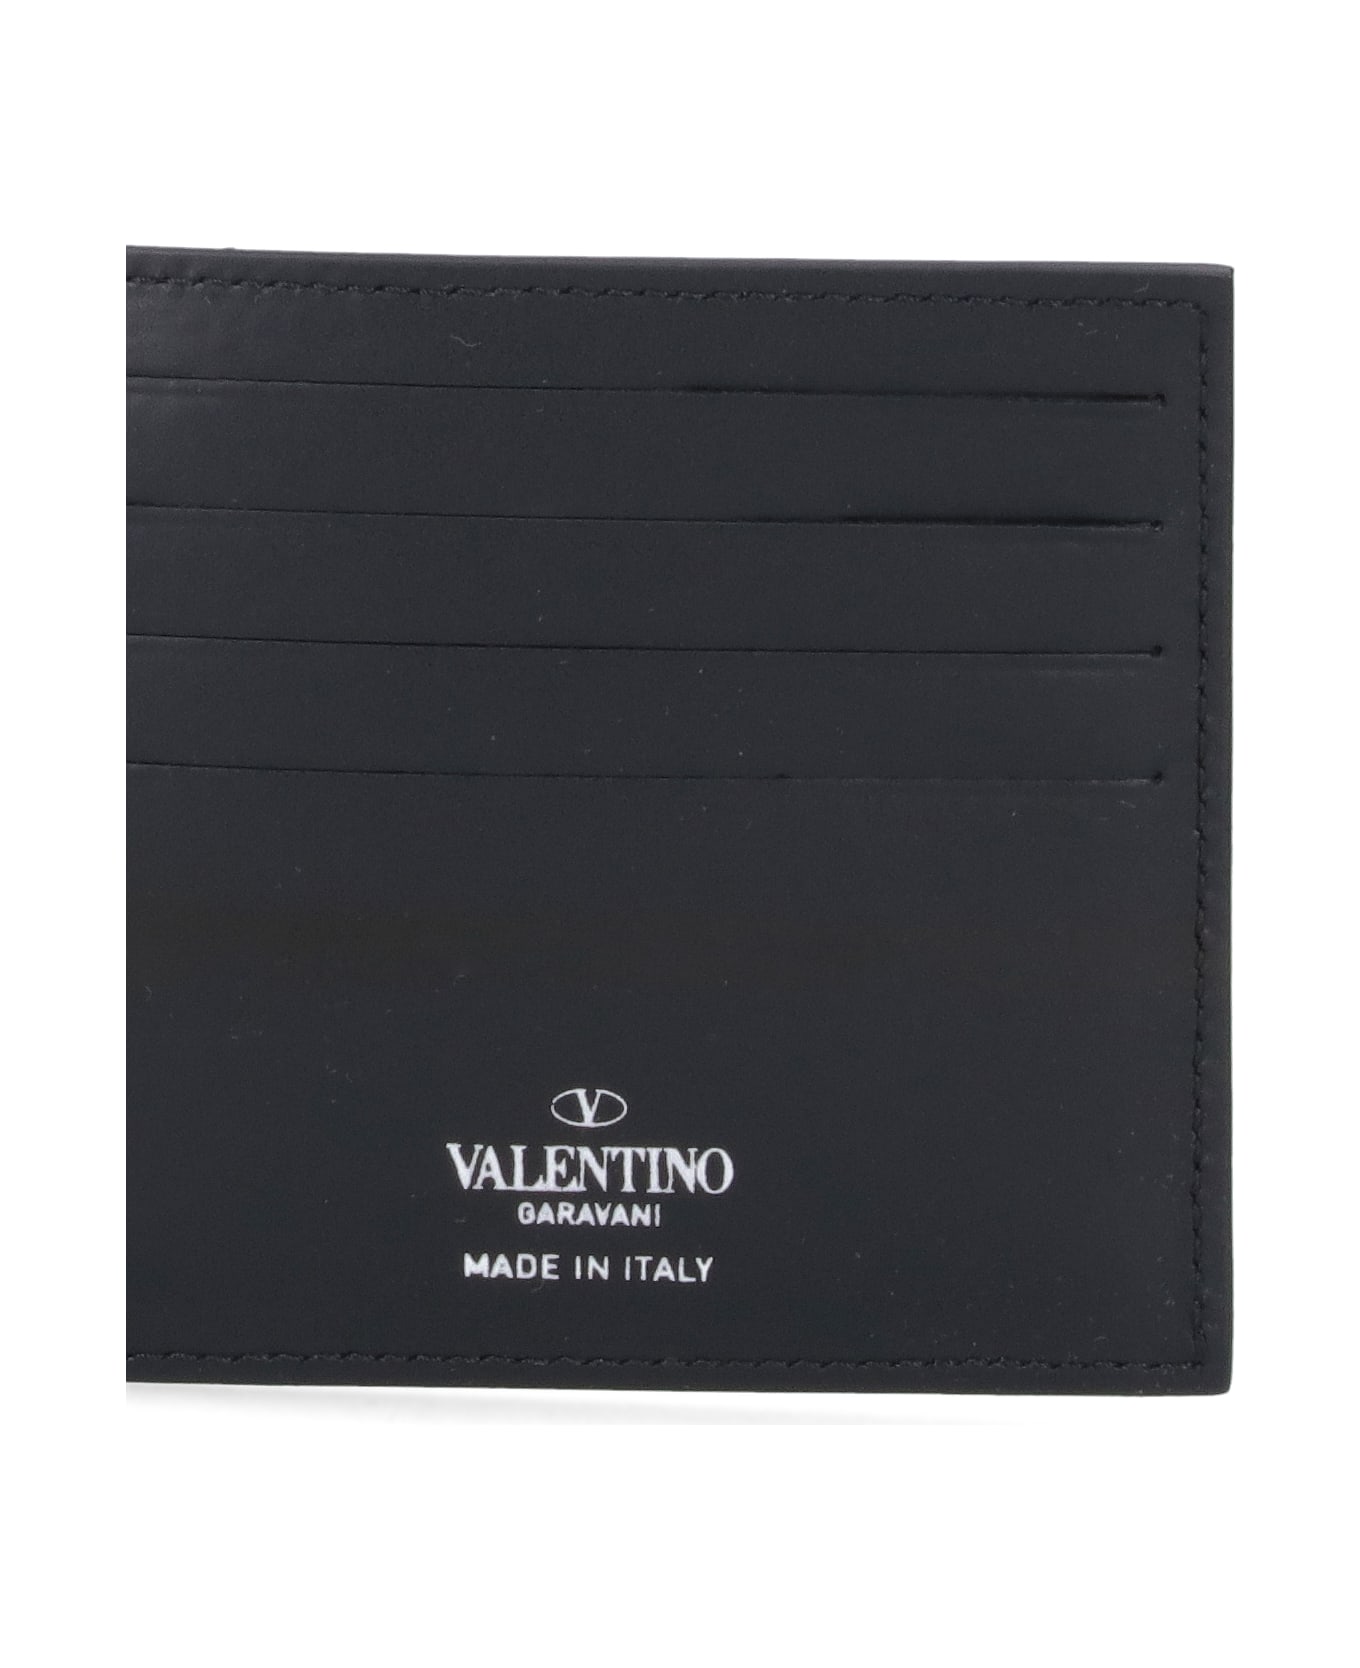 Valentino Garavani Wallet - Black